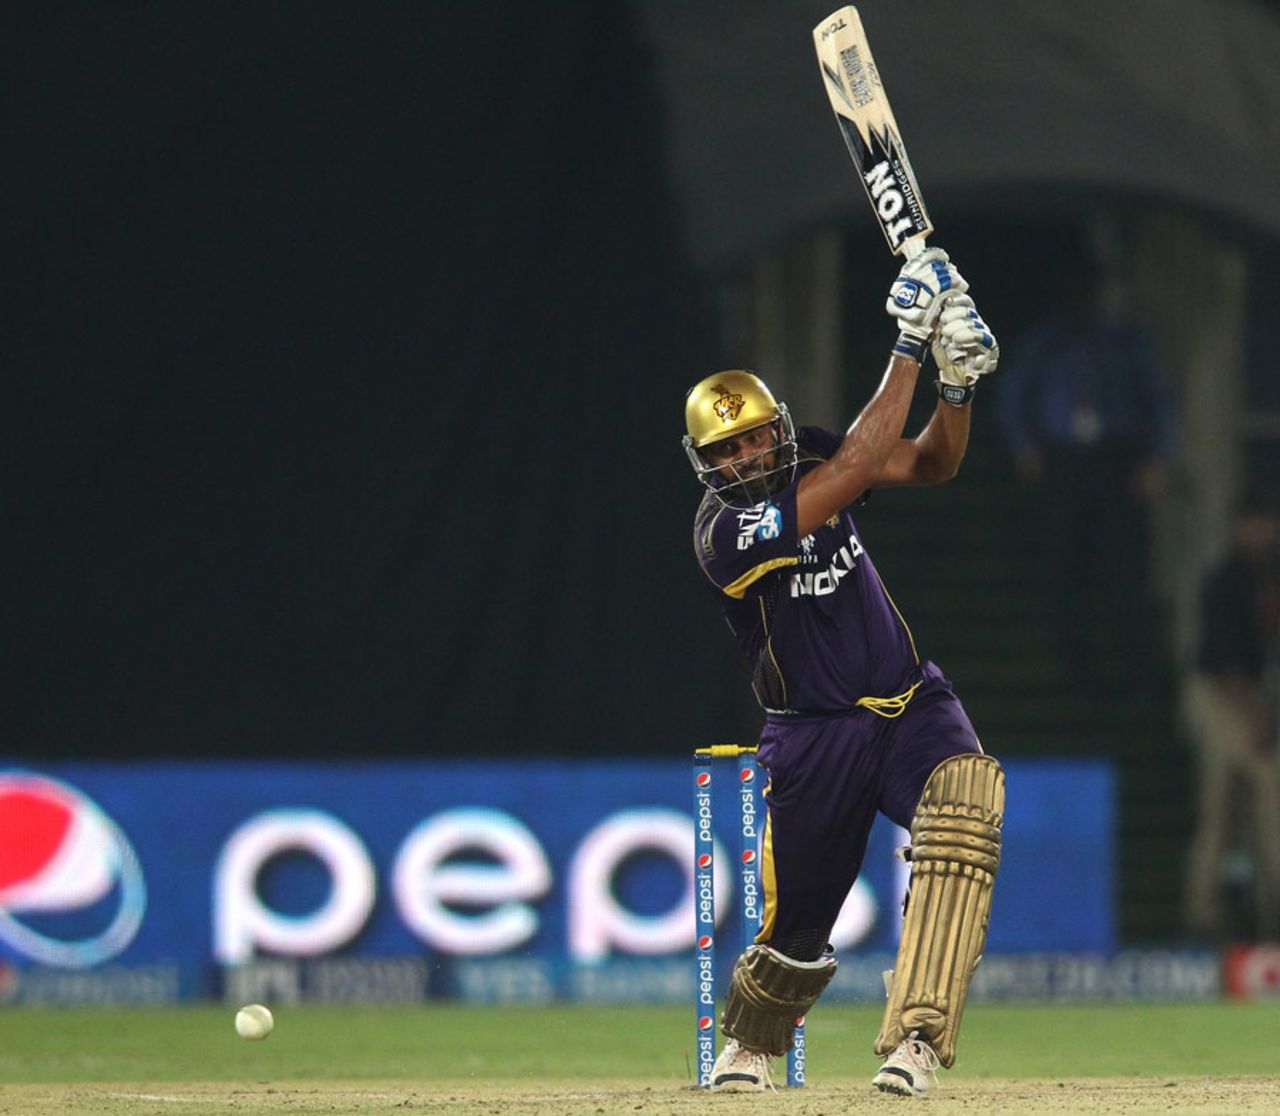 Yusuf Pathan powers the ball through the off side, Sunrisers Hyderabad v Kolkata Knight Riders, IPL 2014, Hyderabad, May 18, 2014